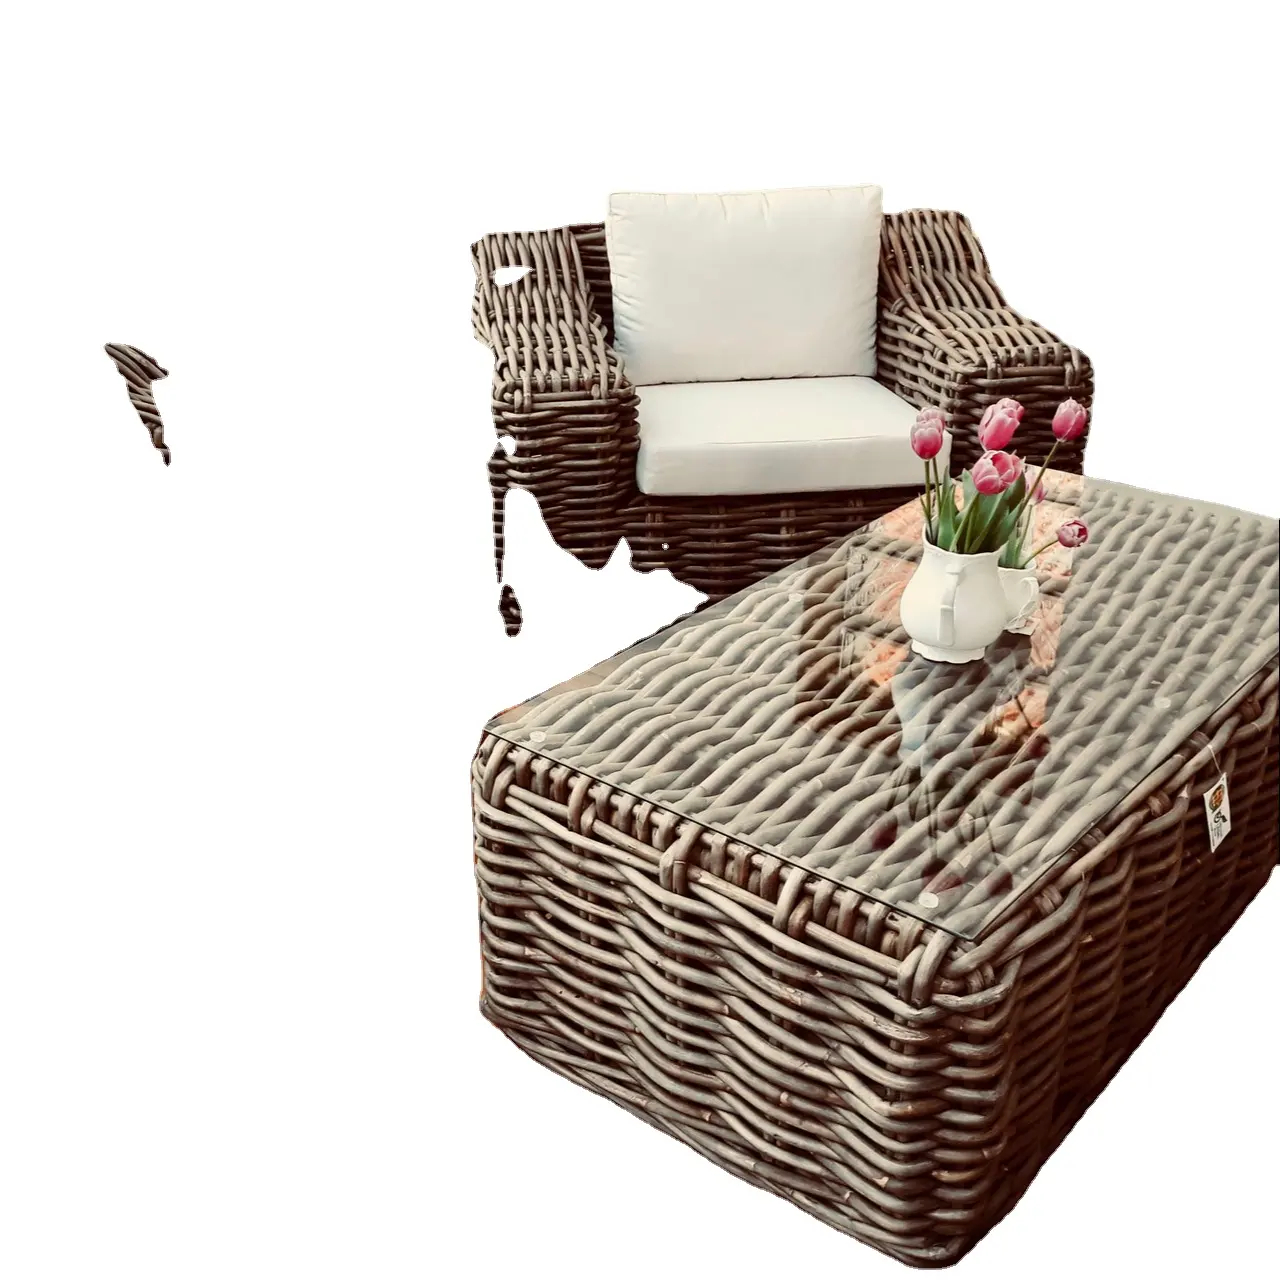 Outdoor rattan garden sofa round shape weave handicraft sofa 2 seater with sponge cushion comfortable